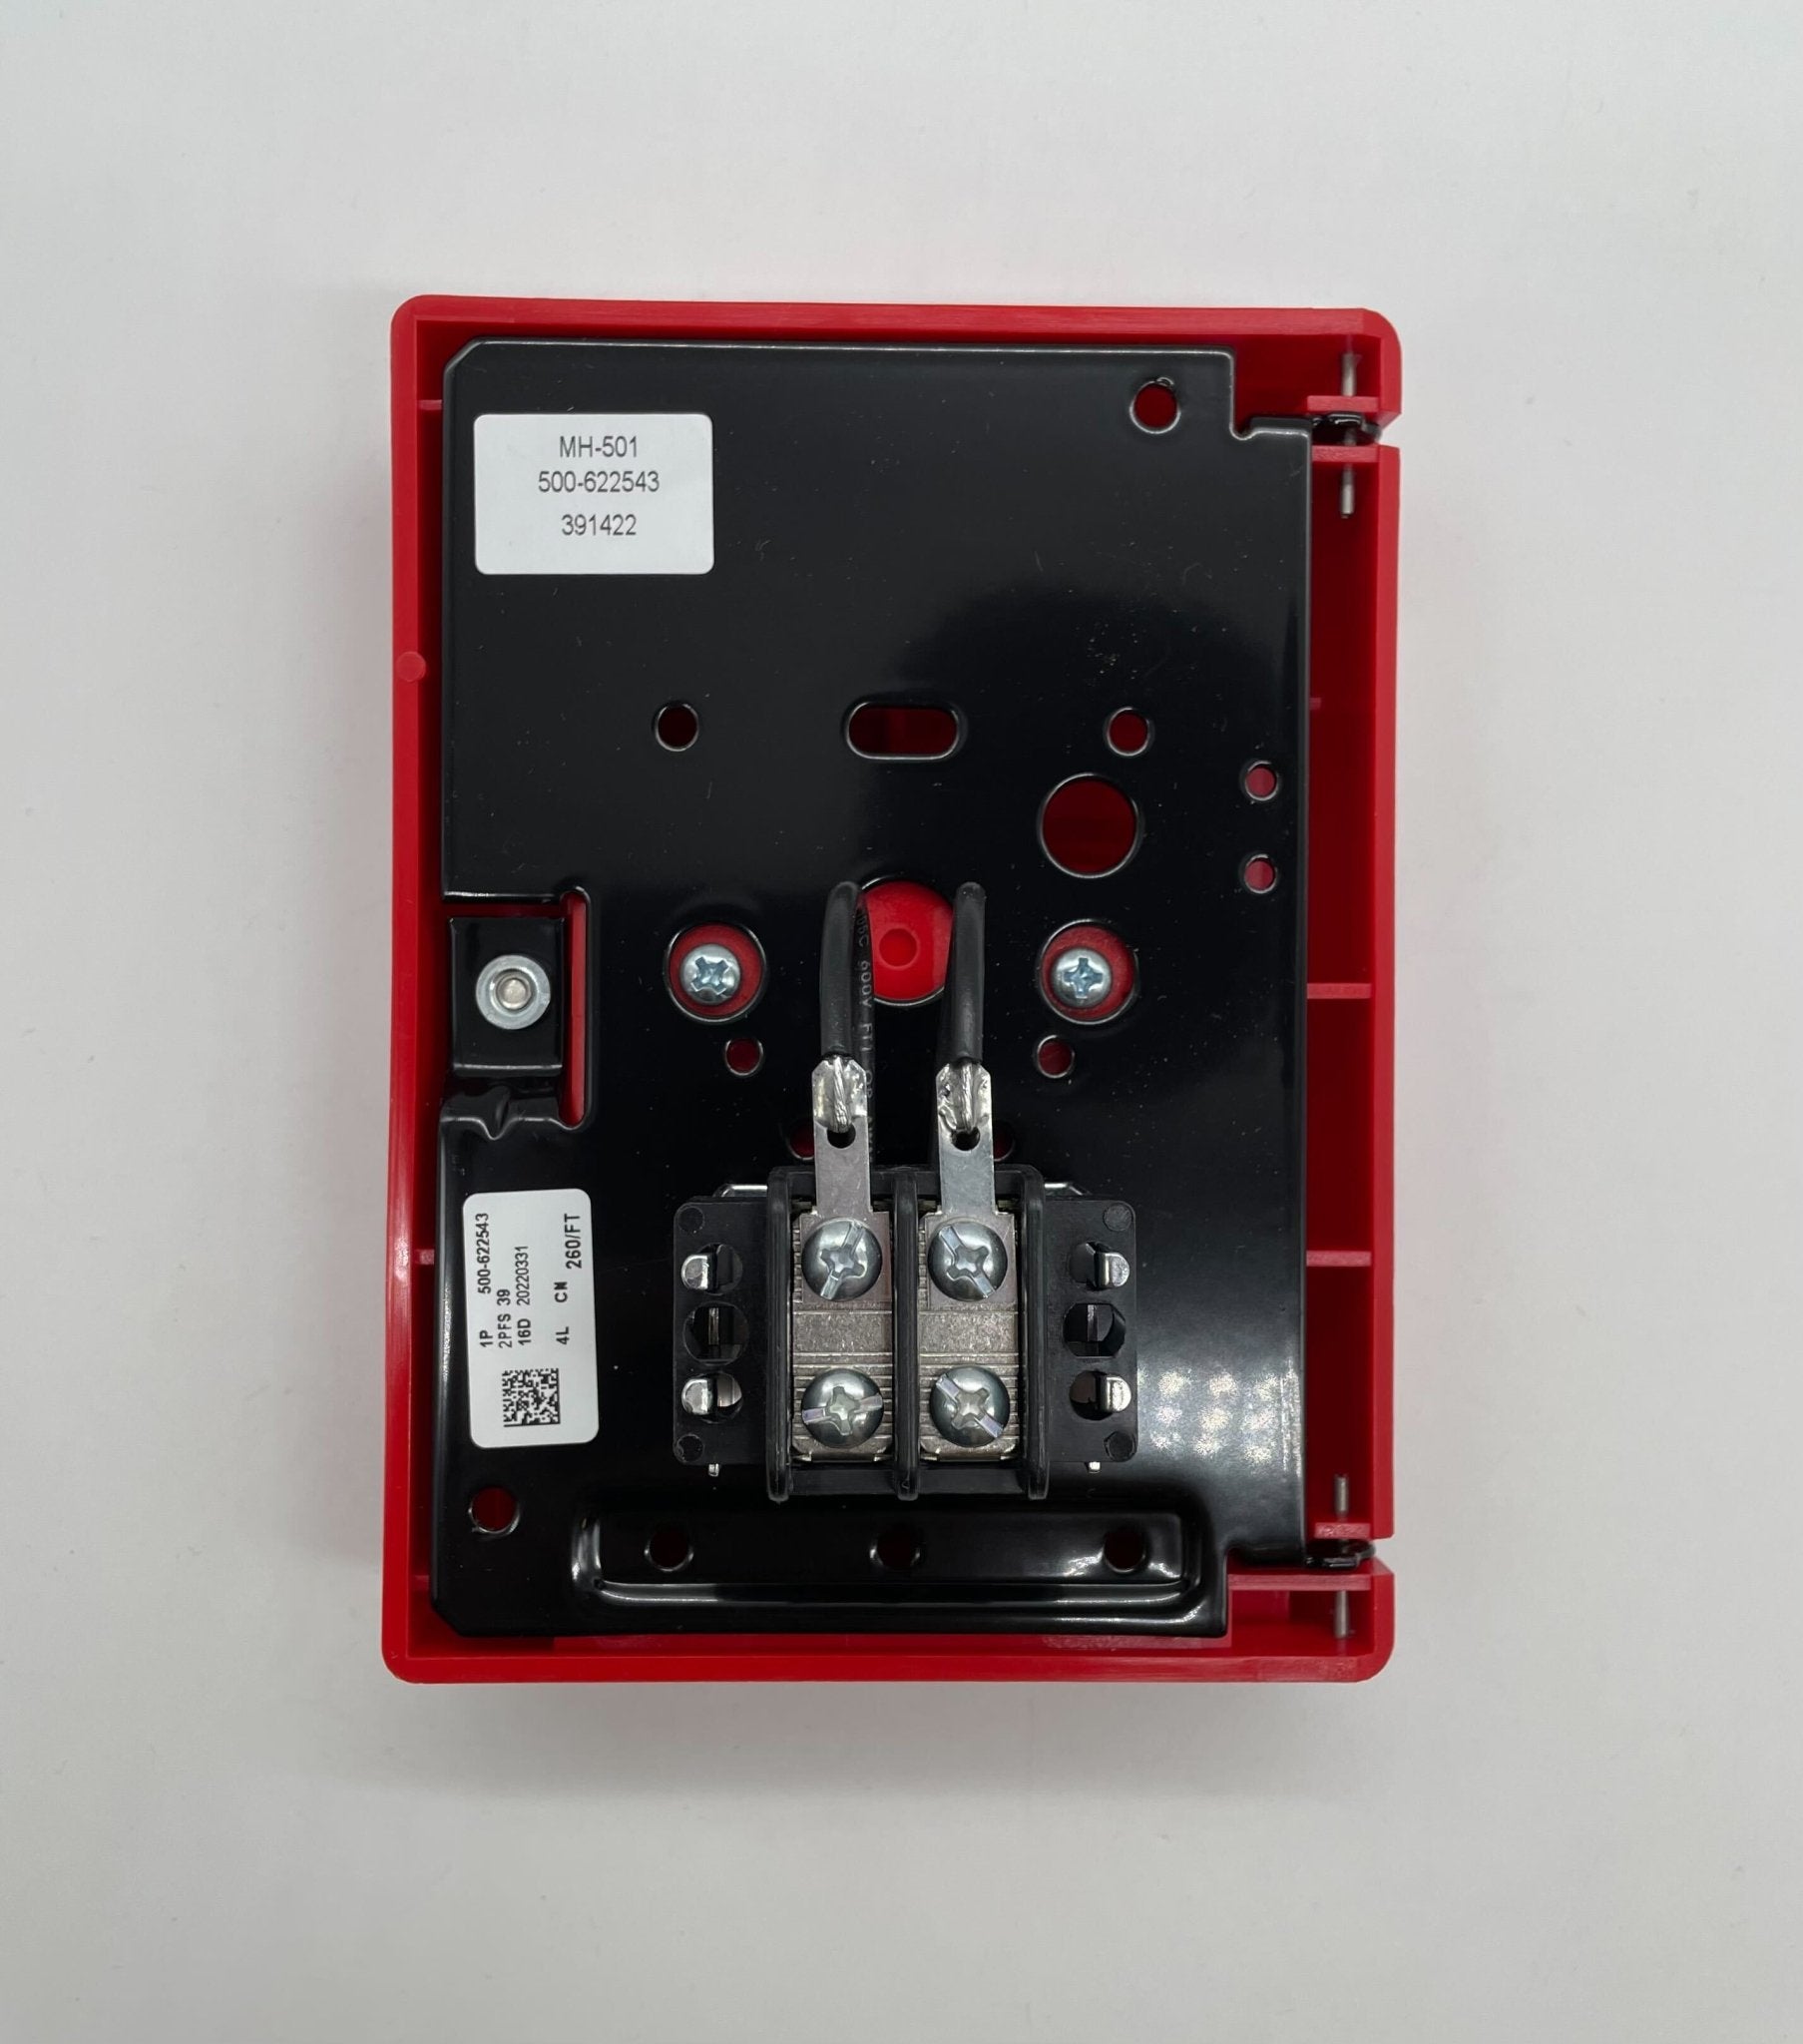 Siemens MH-501 - The Fire Alarm Supplier